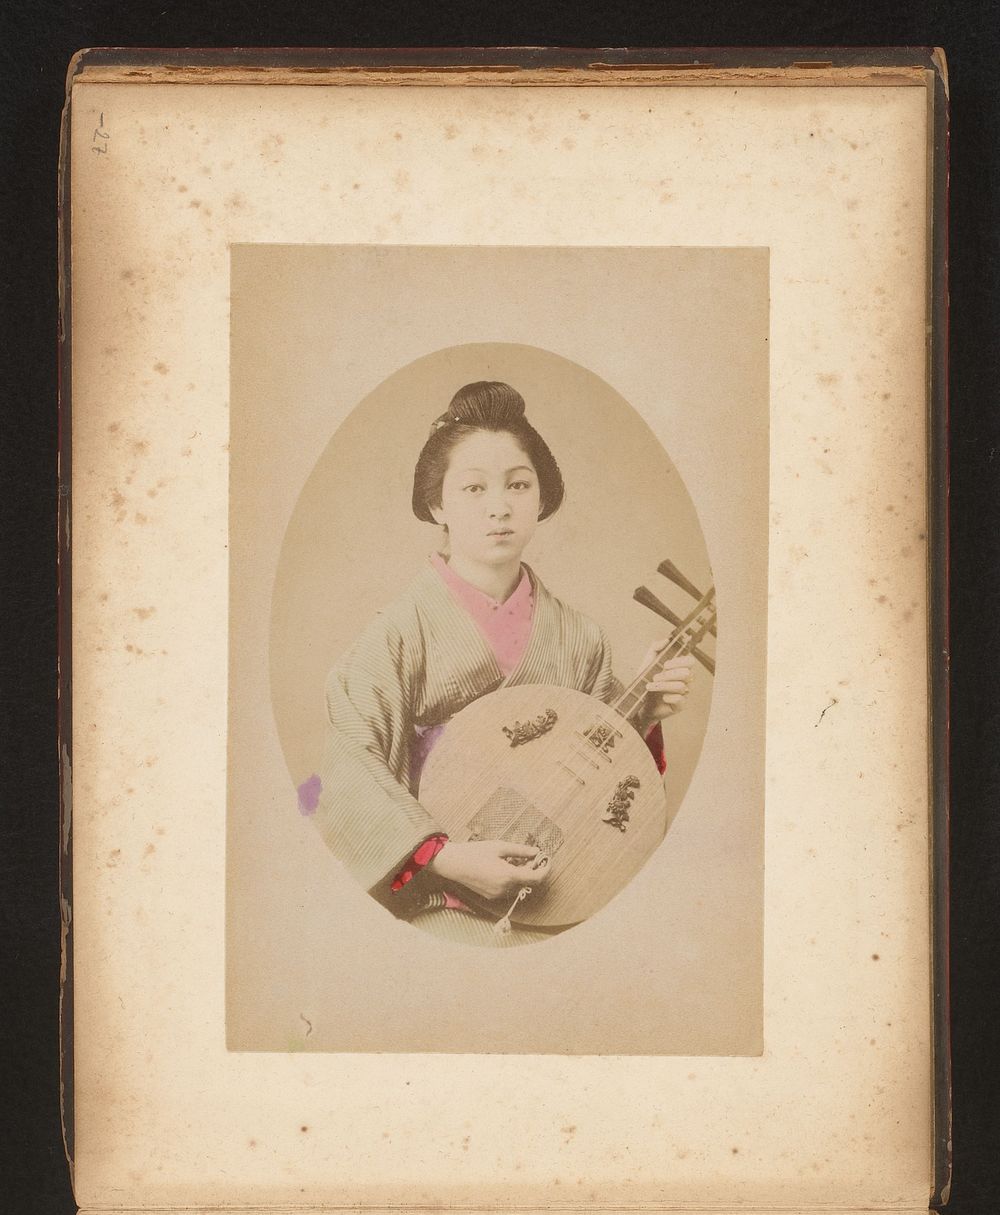 Japanse vrouw met een Yueqin (1851 - c. 1900) by anonymous